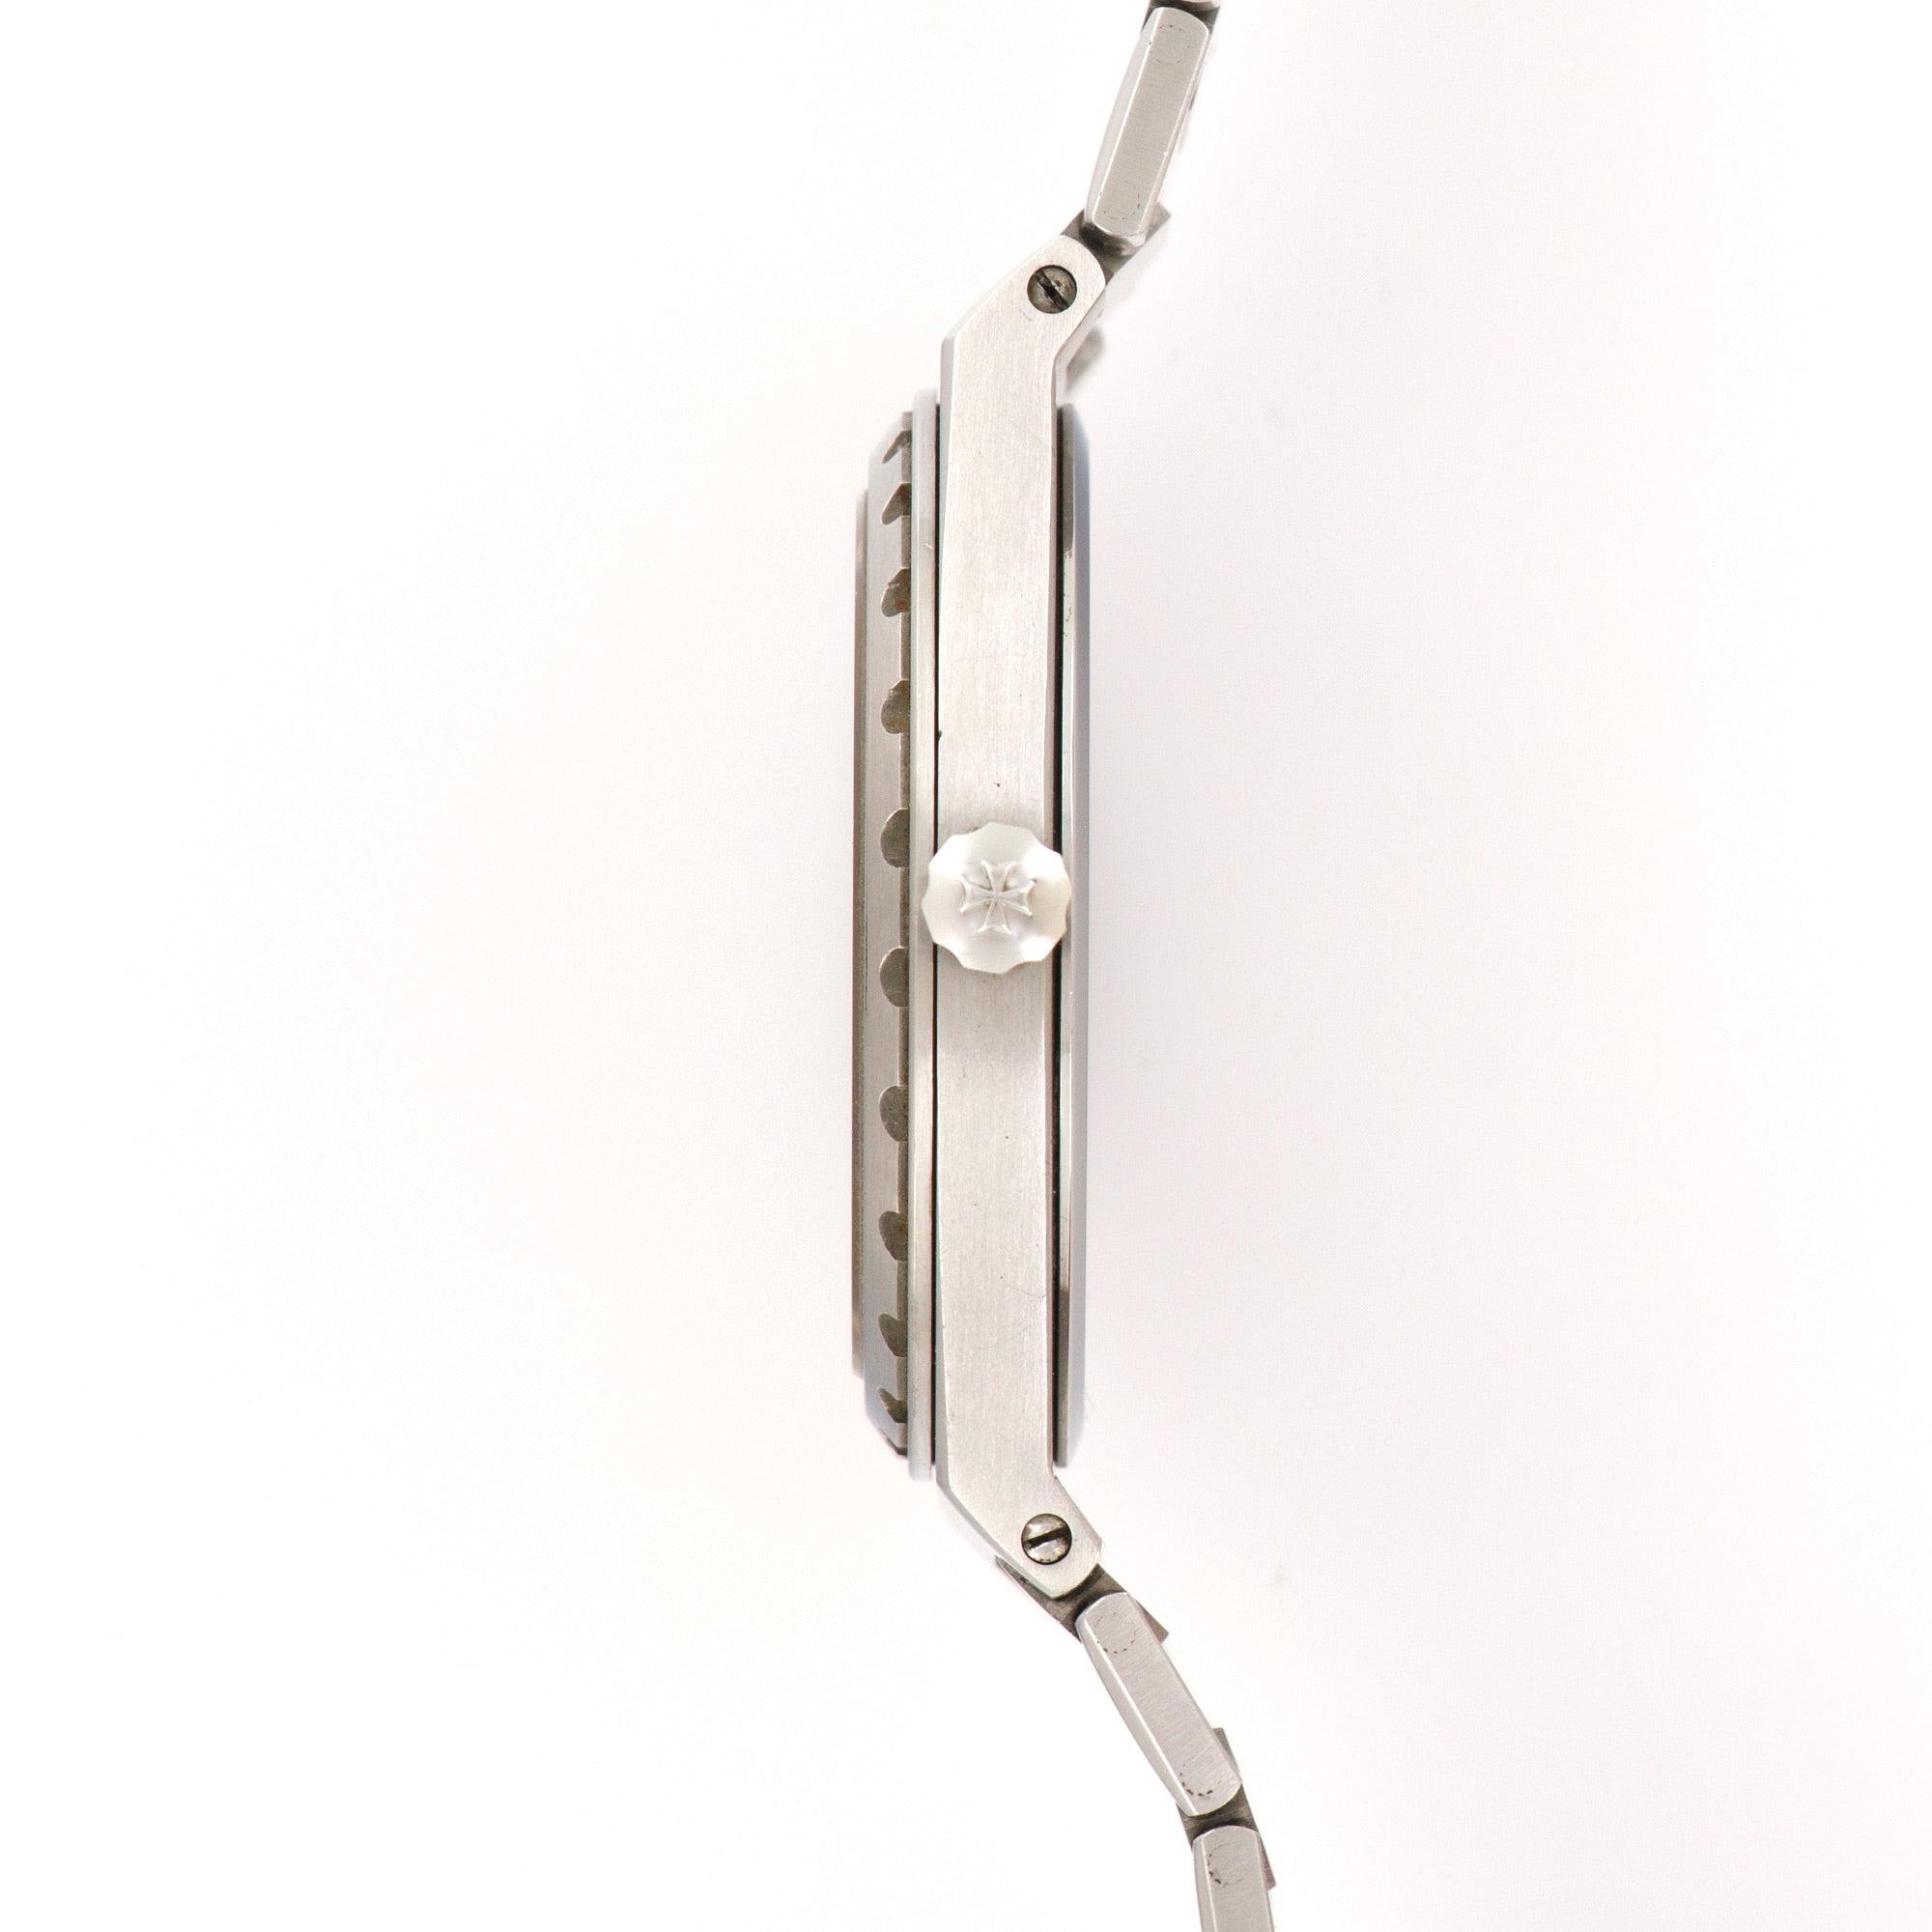 Vacheron Constantin - Vacheron Constantin Overseas Jumbo Automatic 222 Watch Ref. 44018 with Original Box and Papers - The Keystone Watches